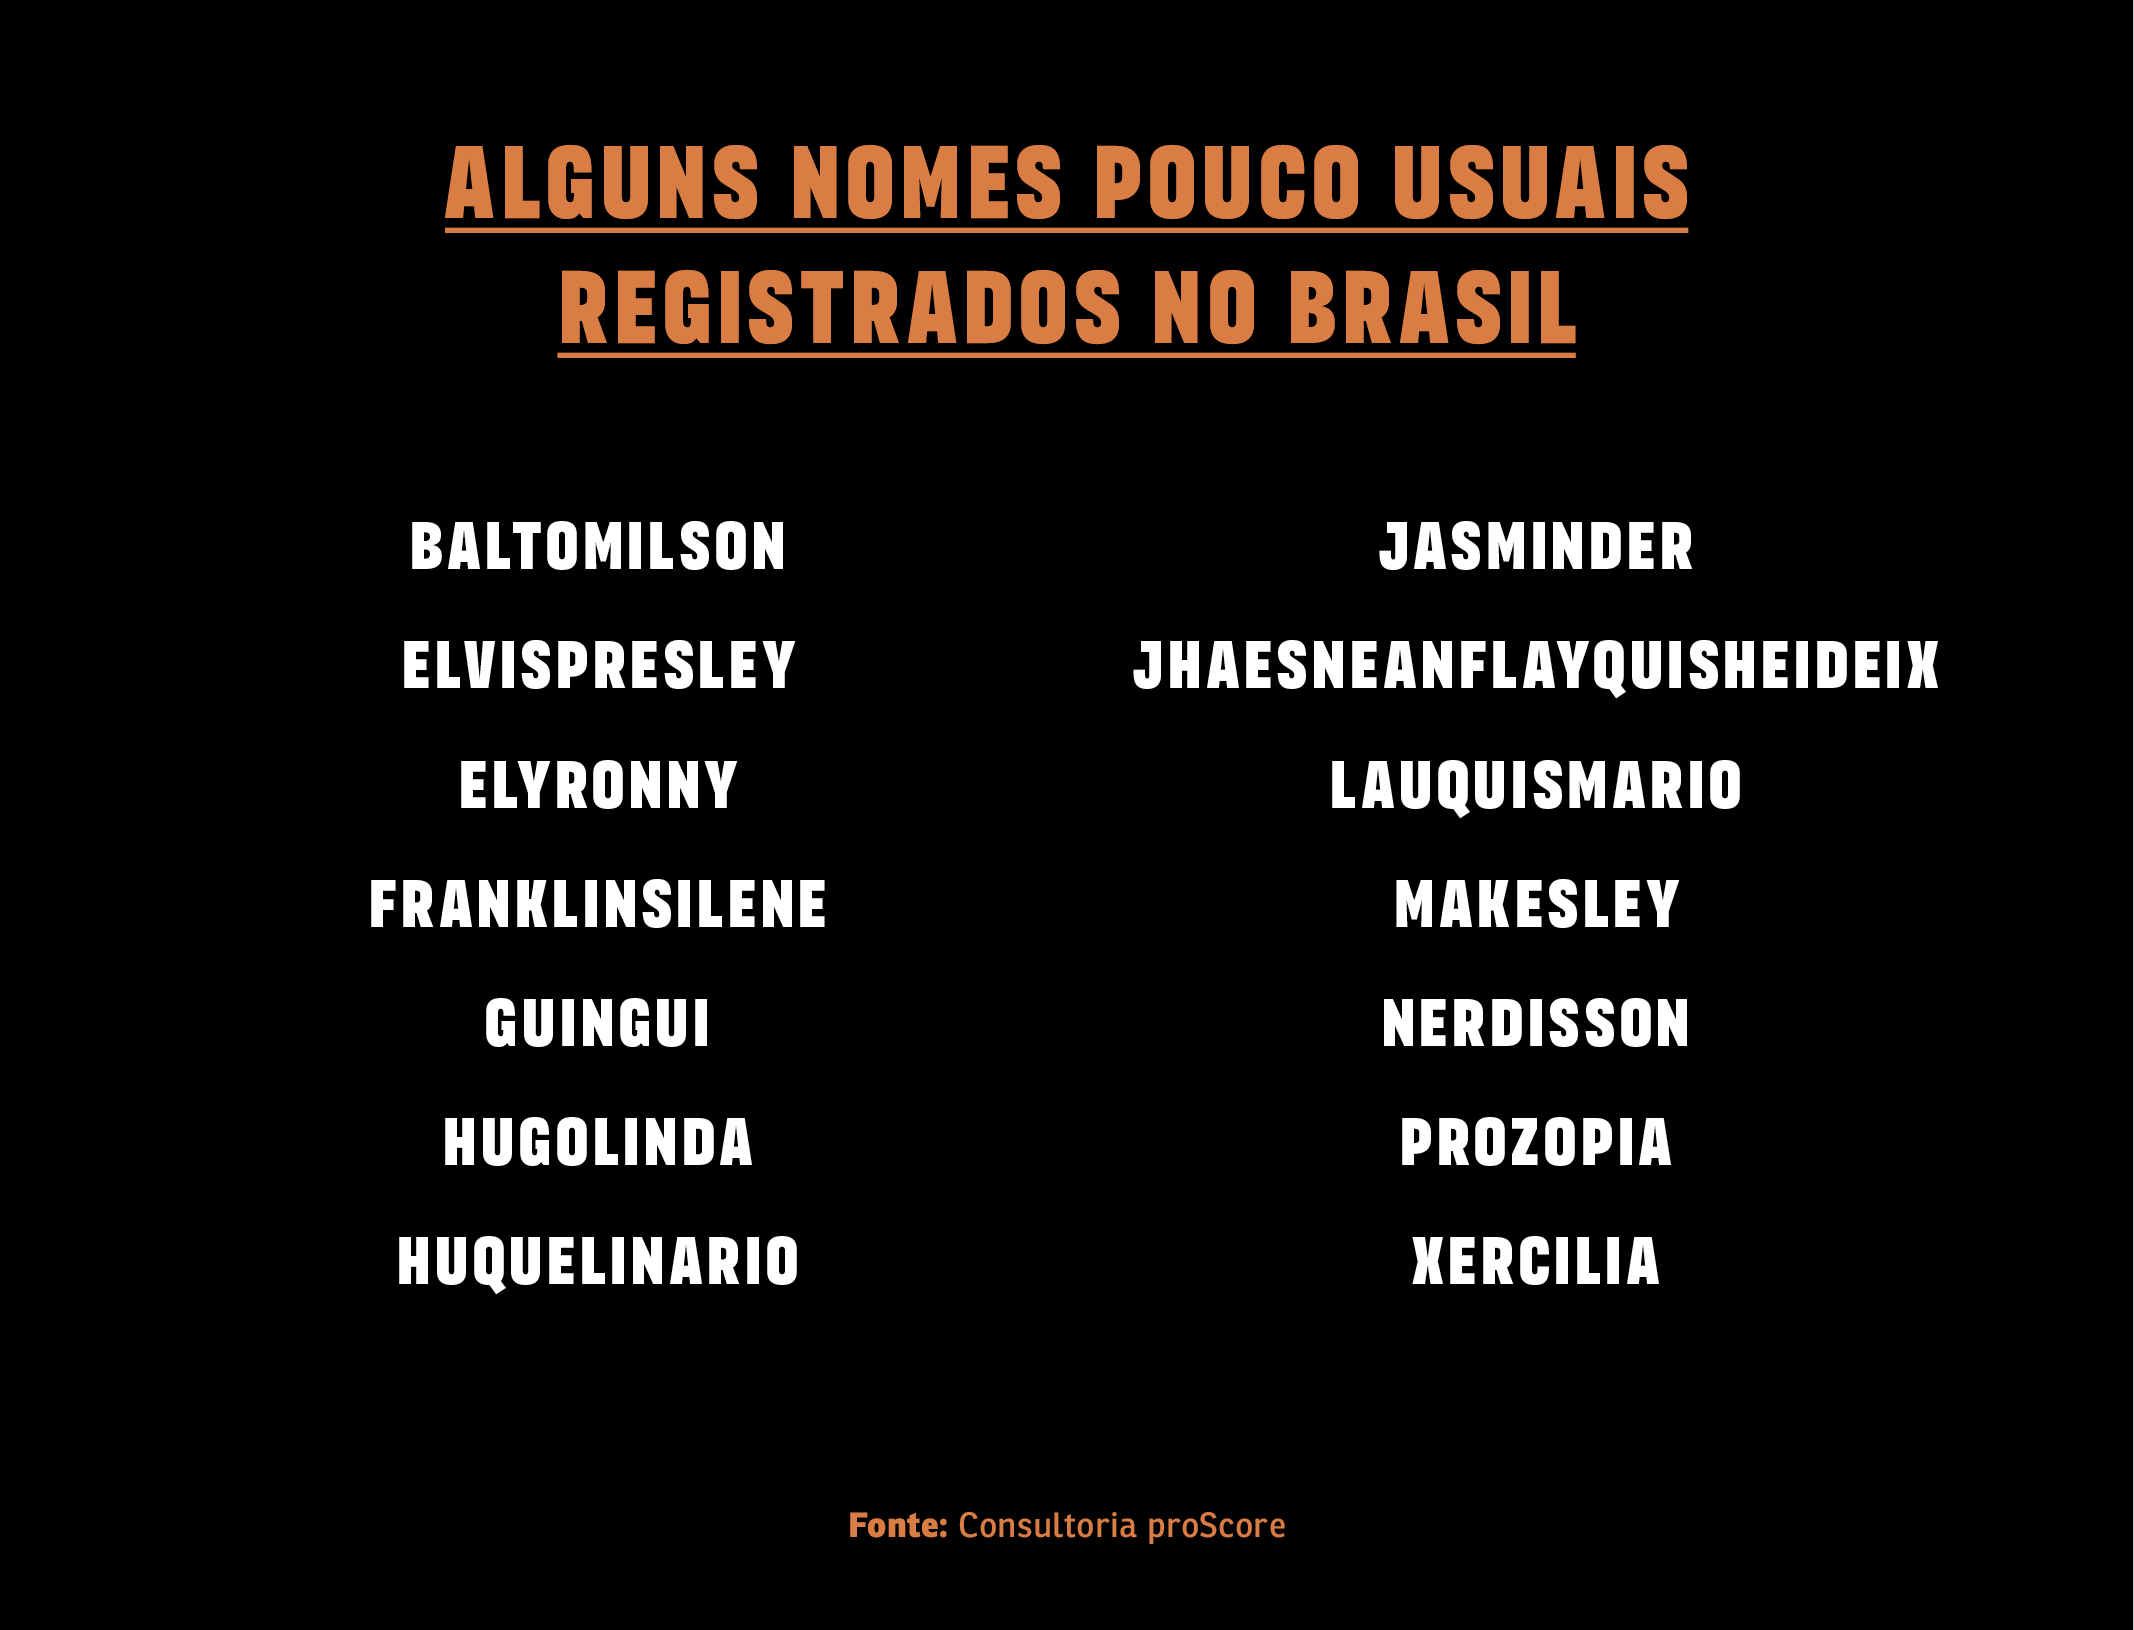 Lista de nomes pouco usuais registrados no Brasil: Baltomilson, Elvispresley, Elyronny, Franklinsilene, Guingui, Hugolinda, Huquelinario, Jasminder, Jhaesneanflayquisheideix, Lauquismario, Makesley, Nerdisson, Prozopia, Xercilia